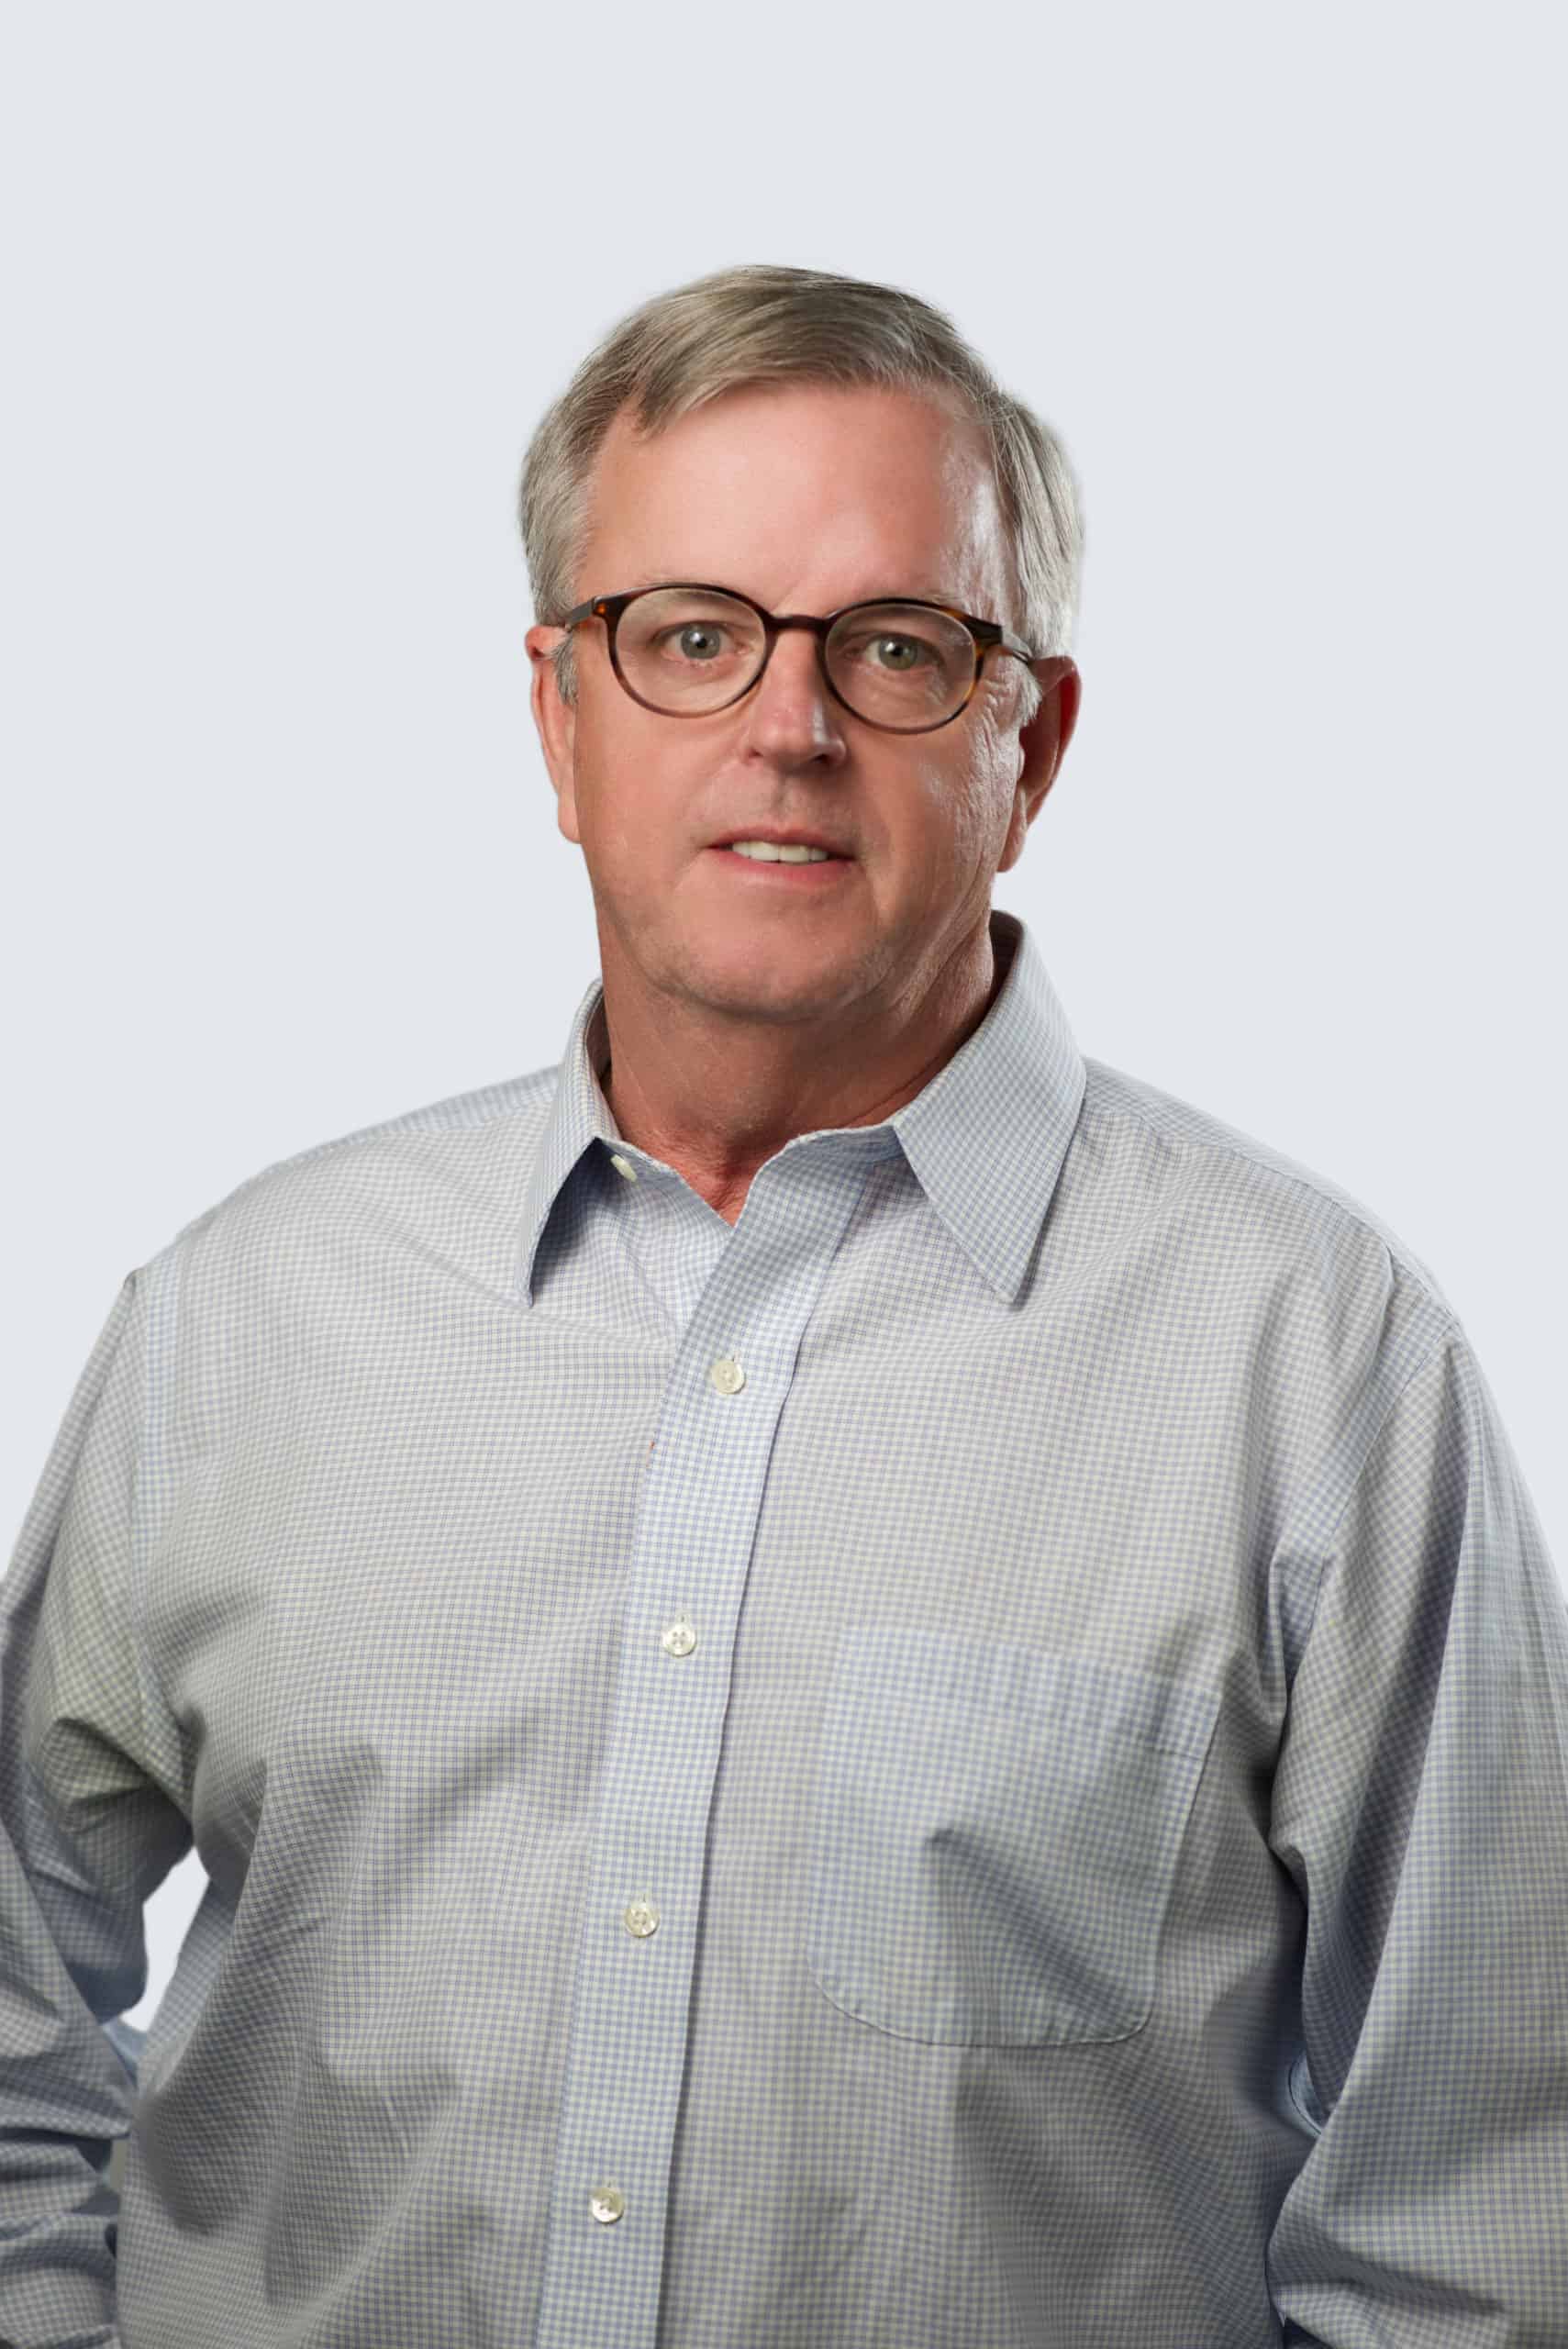 Guy Patterson, Director of Medicare Reimbursement